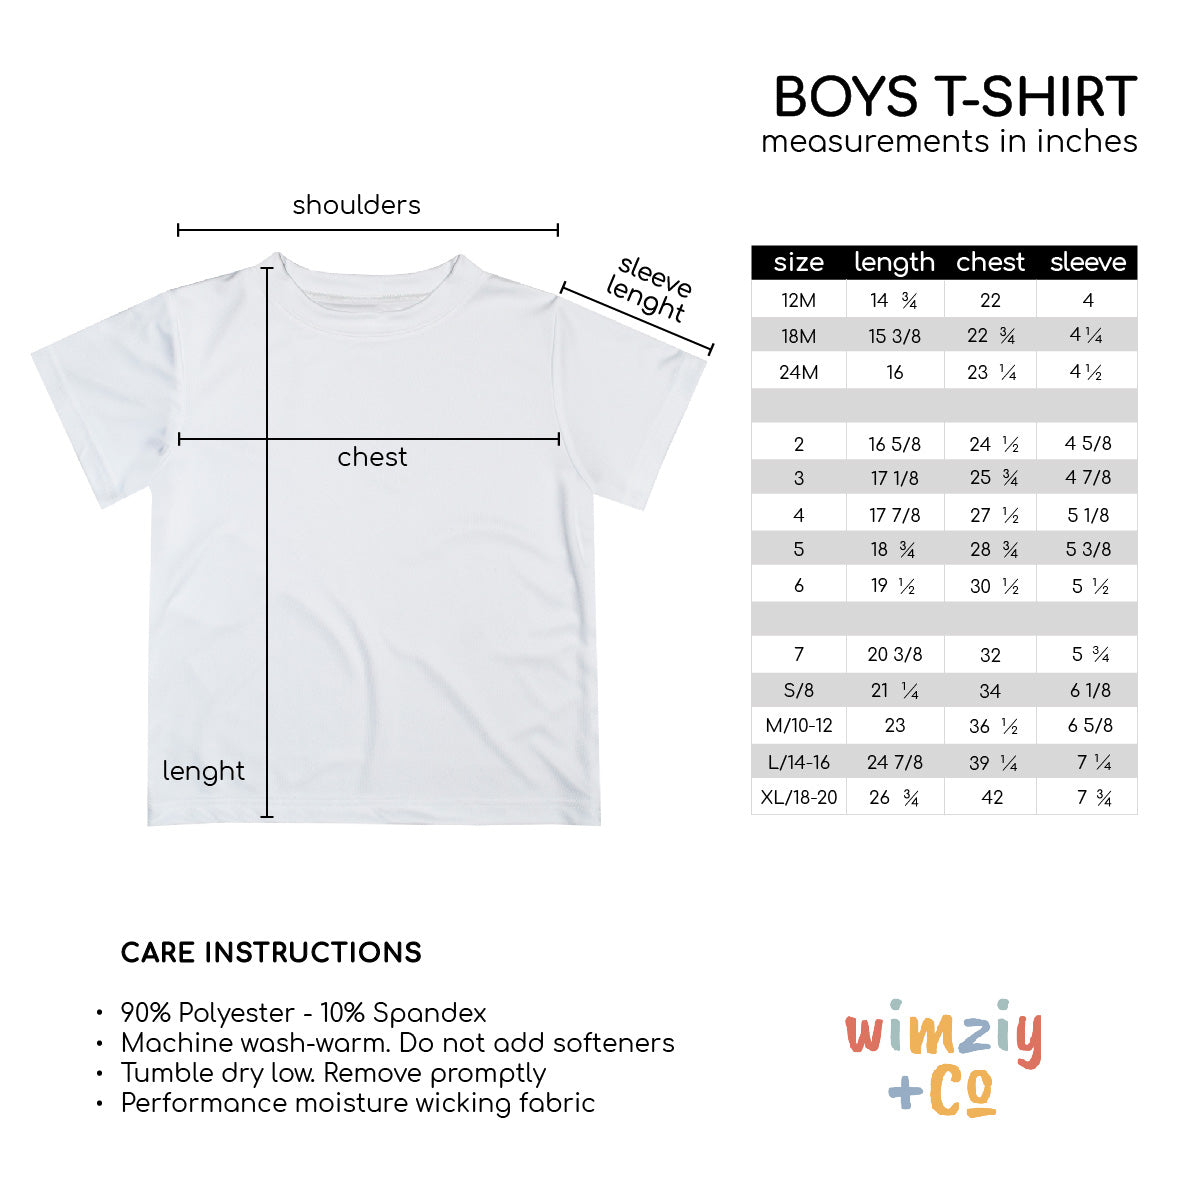 Soccer Ball White and Black Short Sleeve Boys Tee Shirt - Wimziy&Co.